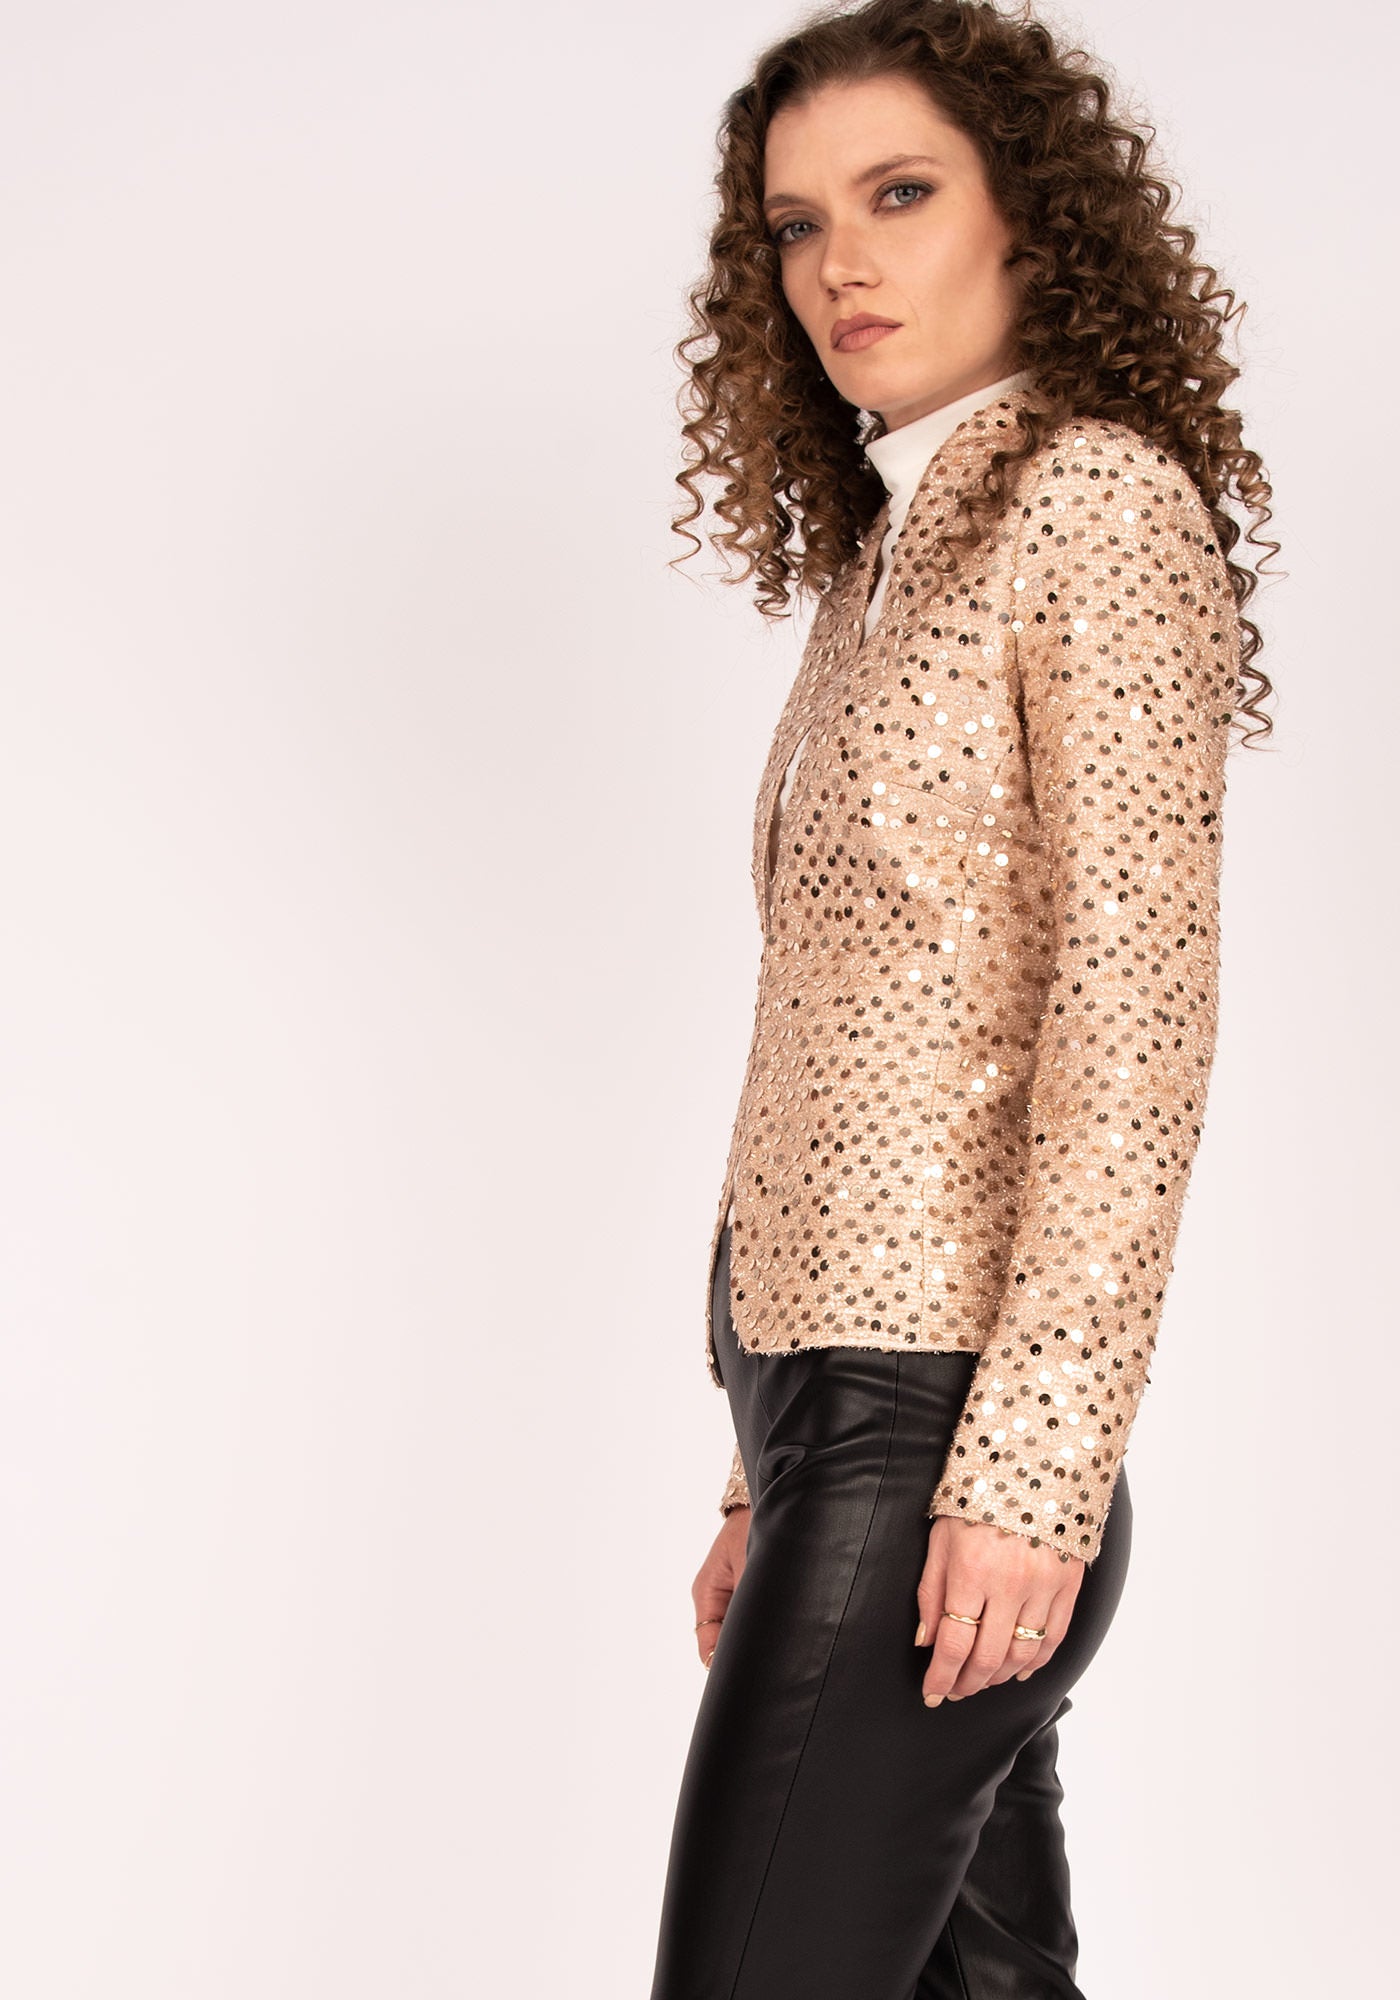 Women's Tailored Statement Blazer with Gold Sequins